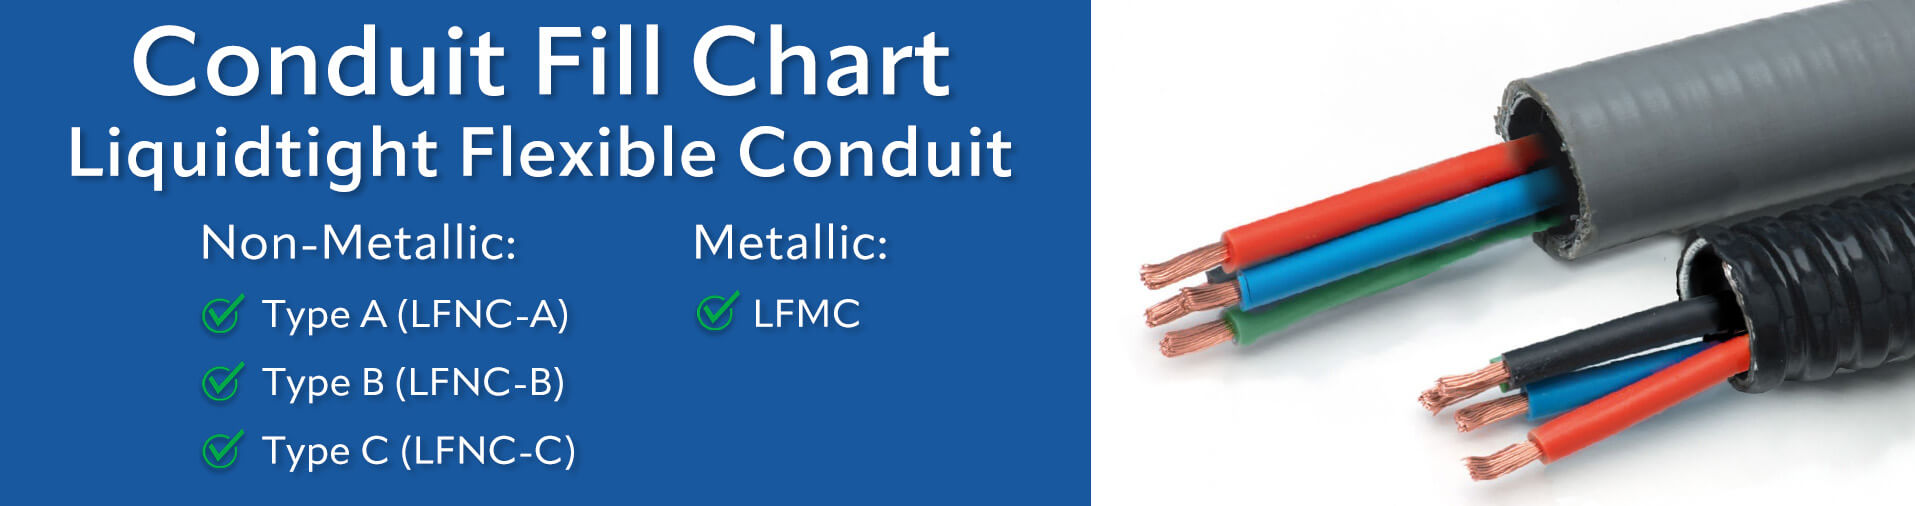 liquid tight conduit filled with wire - Liquidtight Flexible Non-Metallic Conduit(LFNC-A, LFNC-B, LFNC-C) and Liquidtight Flexible Metallic Conduit(LFMC)